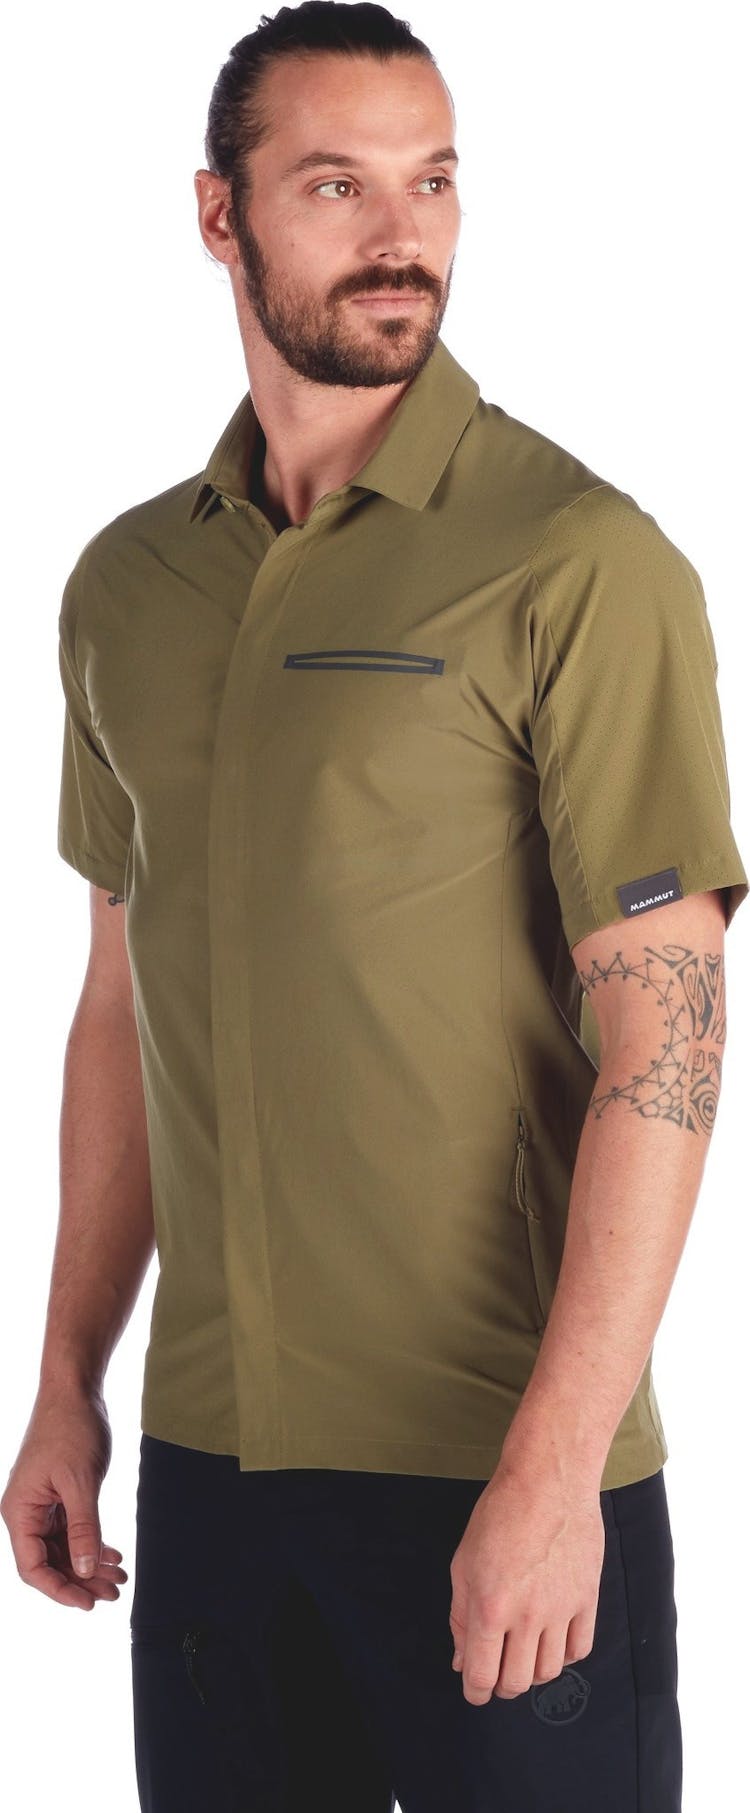 Product gallery image number 4 for product Crashiano Shortsleeve Shirt - Men's